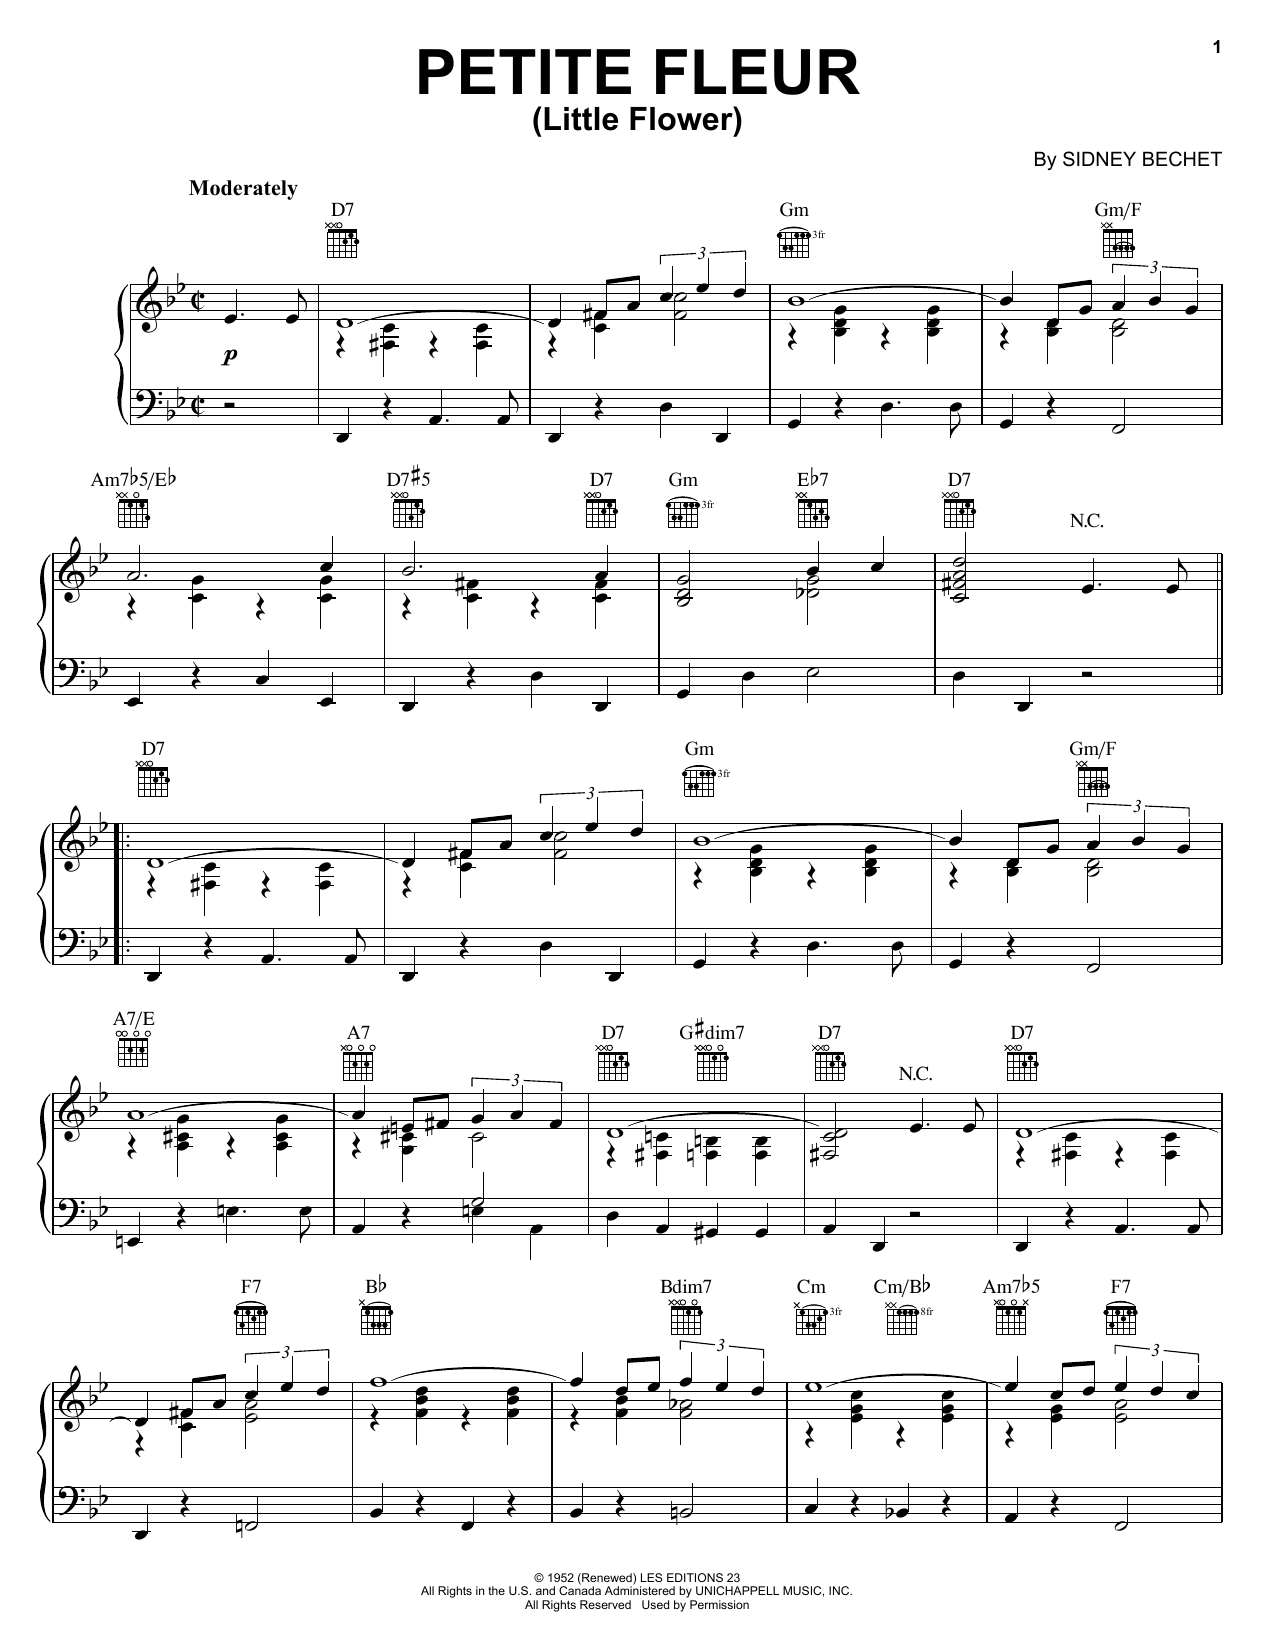 Sidney Bechet Petite Fleur (Little Flower) Sheet Music Notes & Chords for Guitar Tab - Download or Print PDF